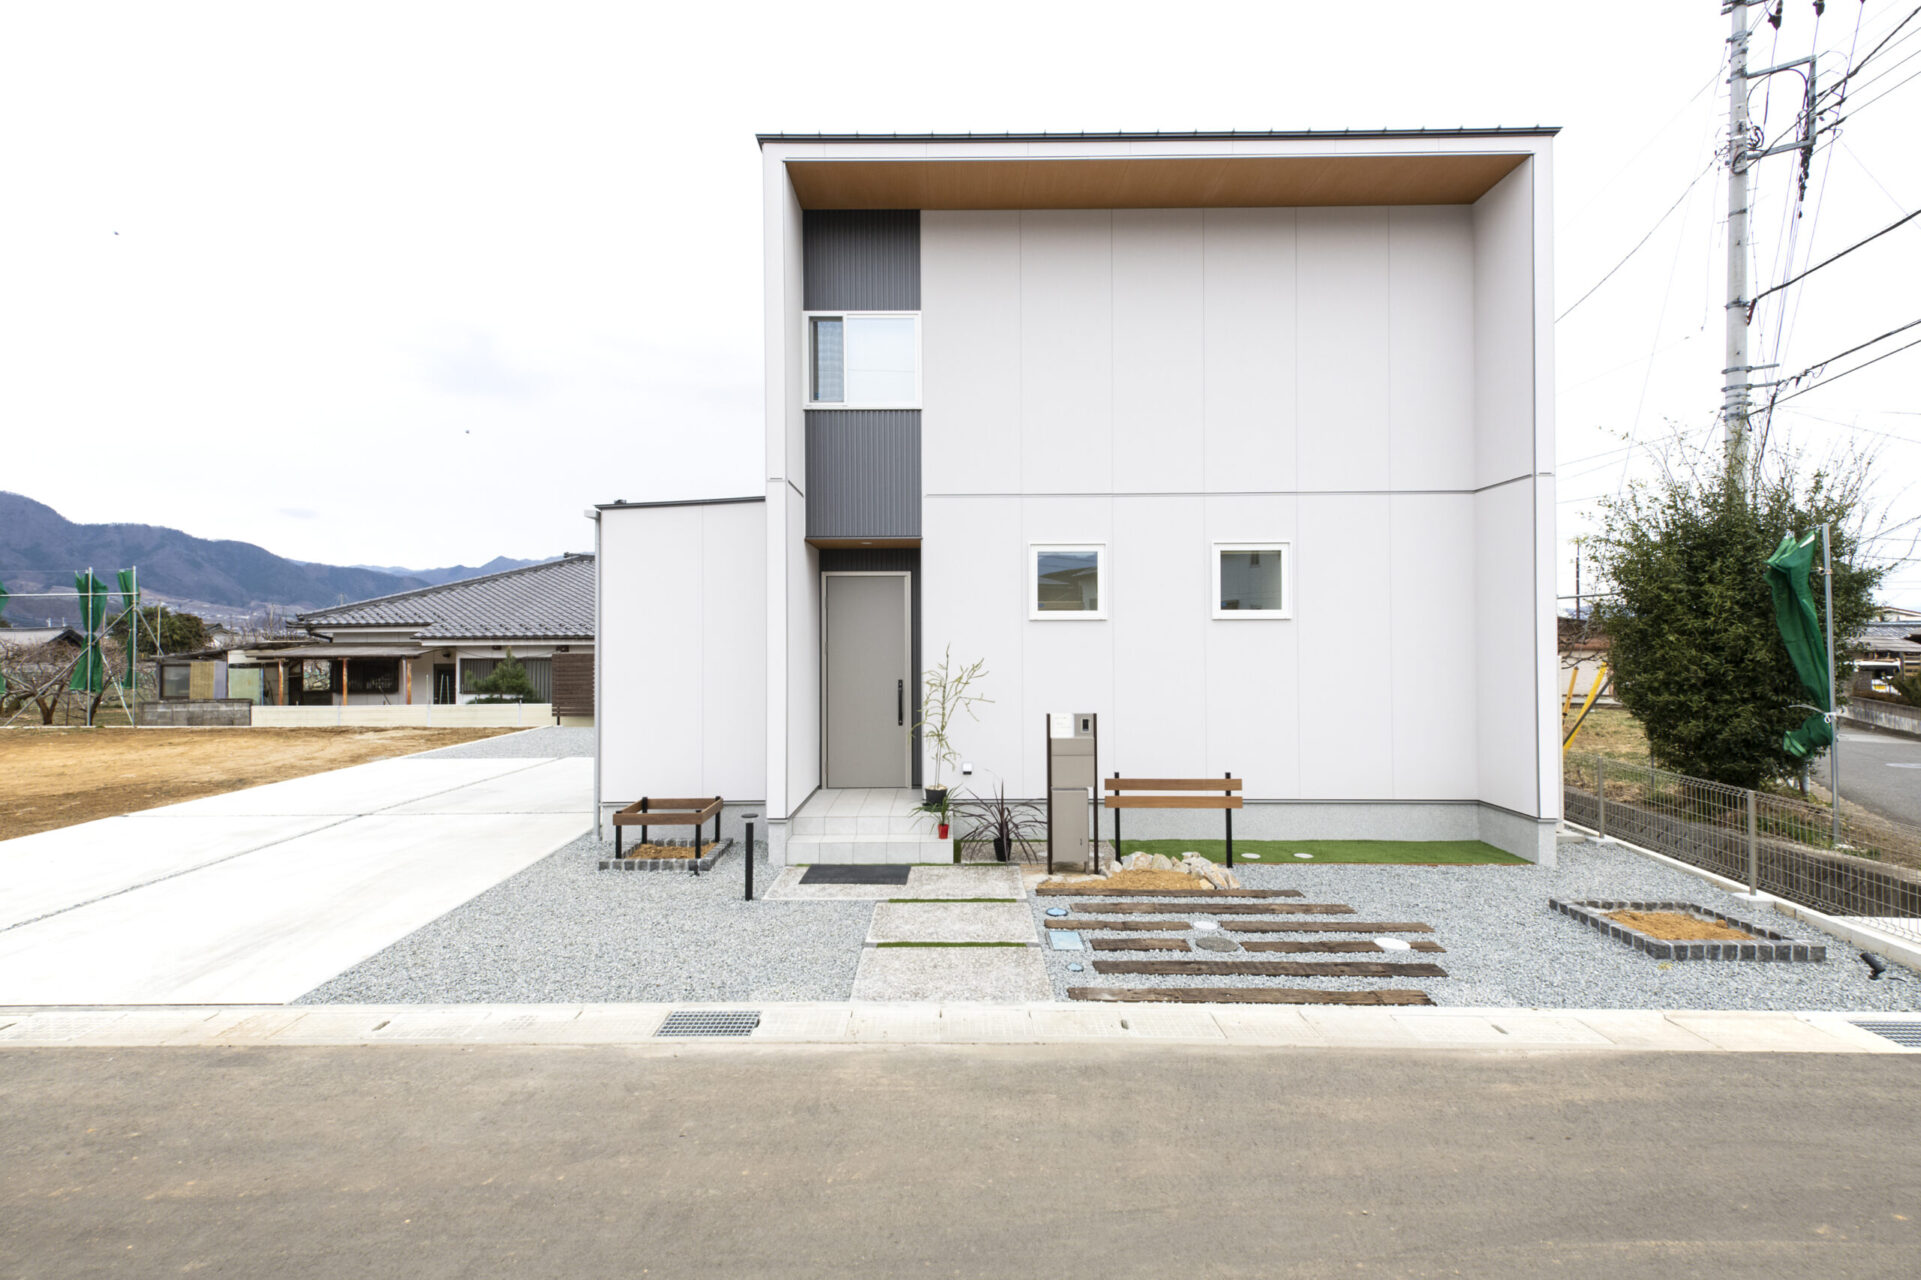 【HIROGALIE-建築実例追加】土間収納のあるボックスハウス:サムネイル